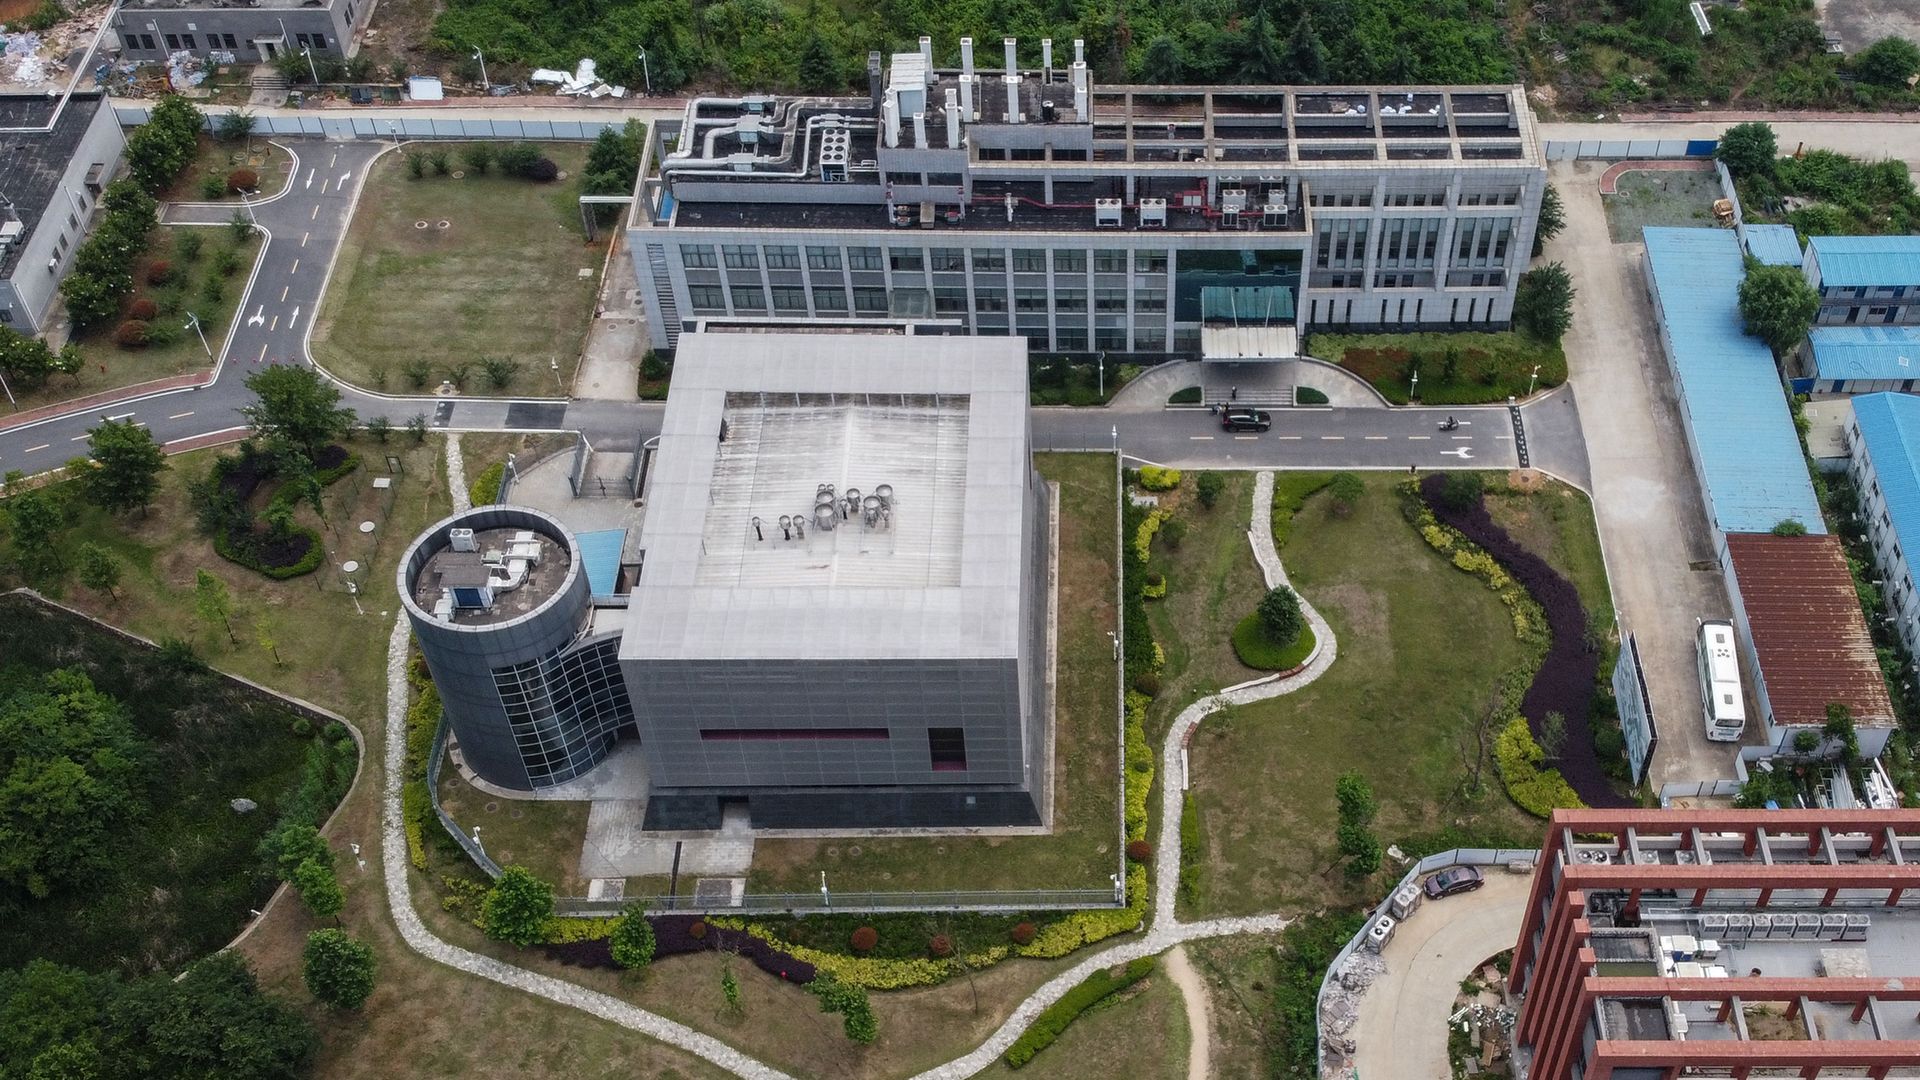 Wuahn Institute of Virology